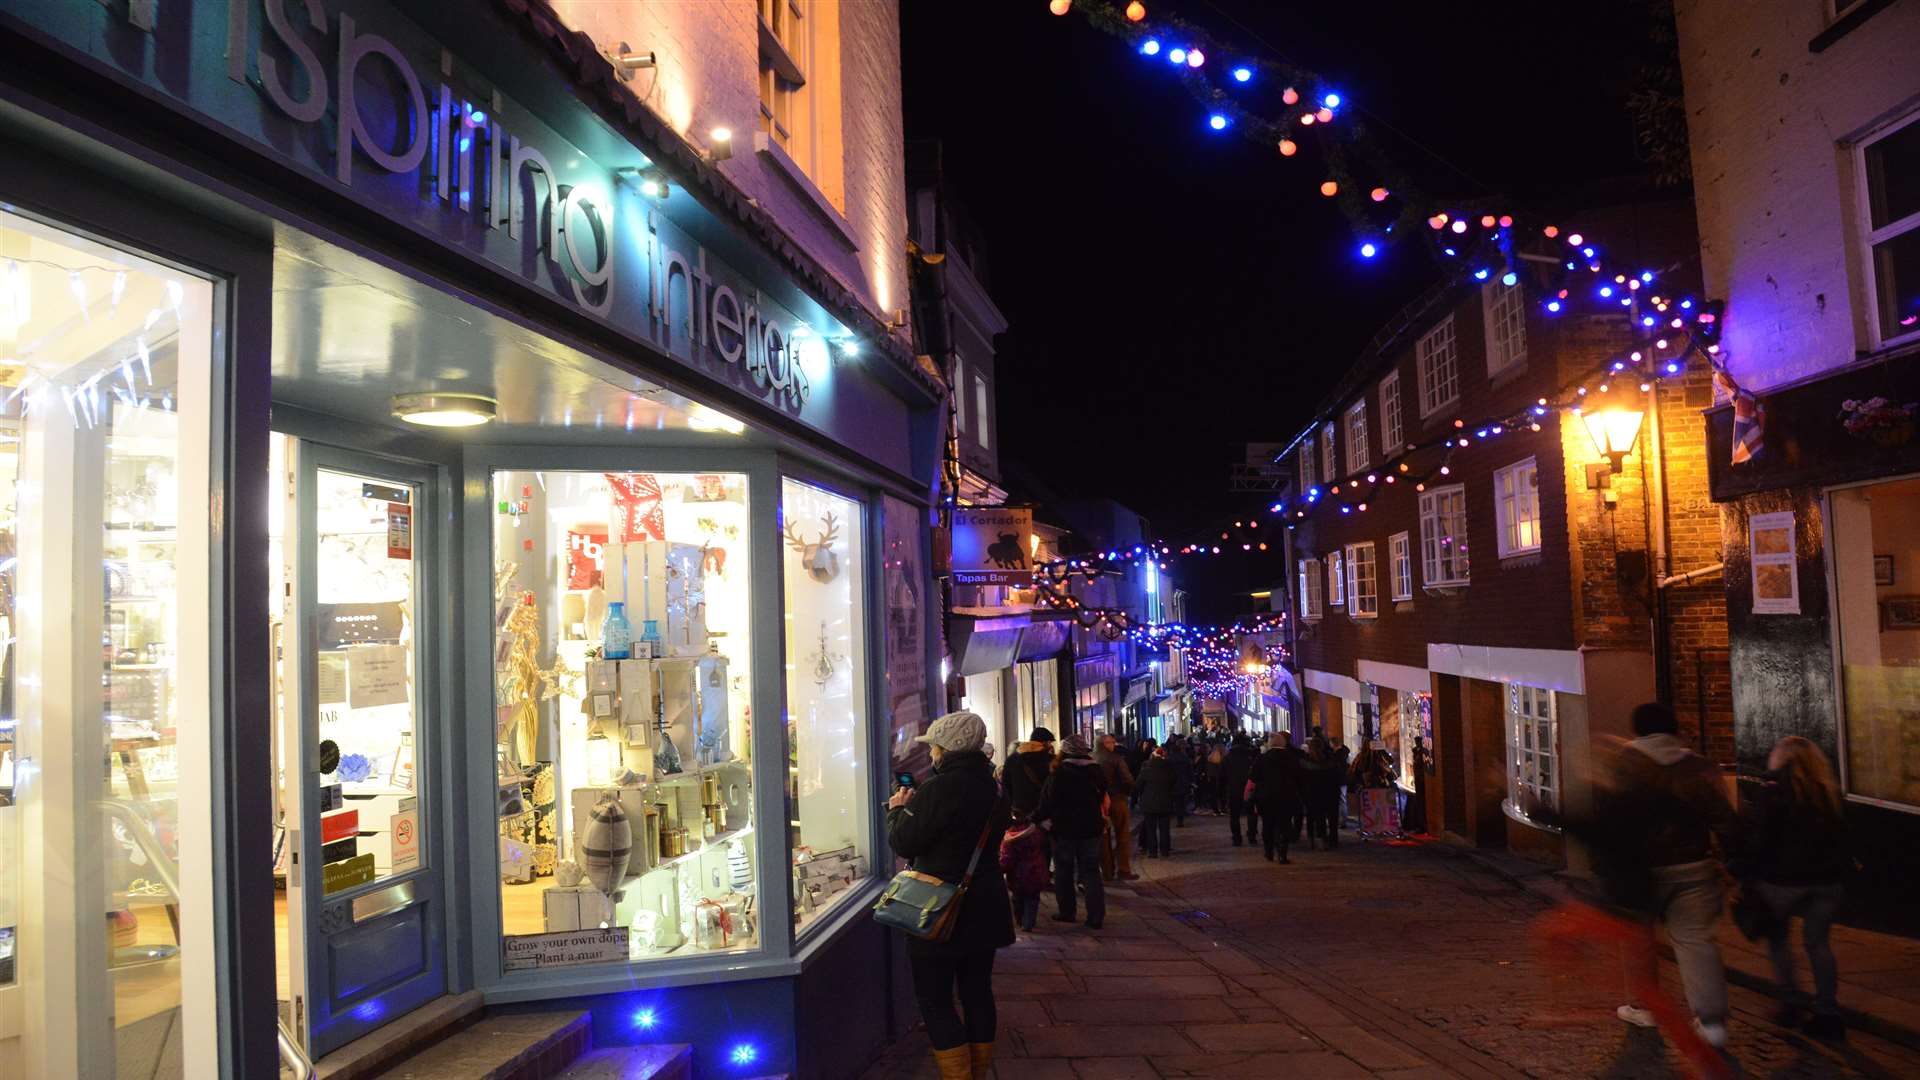 The lights in Folkestone's Creative Quarter